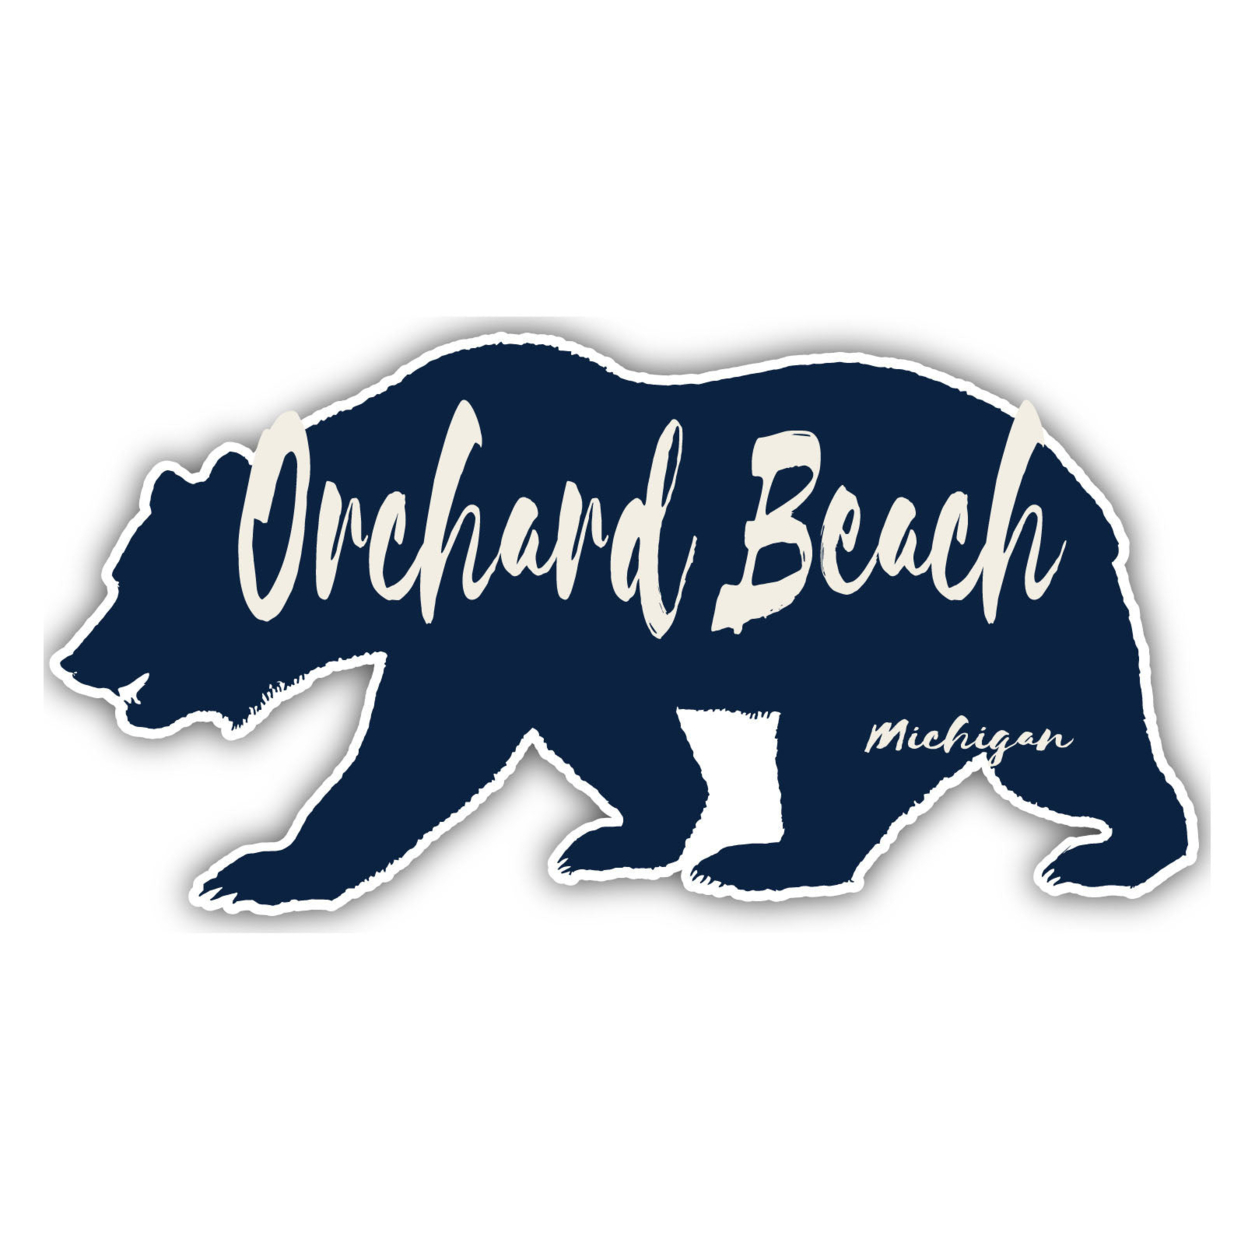 Orchard Beach Michigan Souvenir Decorative Stickers (Choose Theme And Size) - Single Unit, 4-Inch, Bear